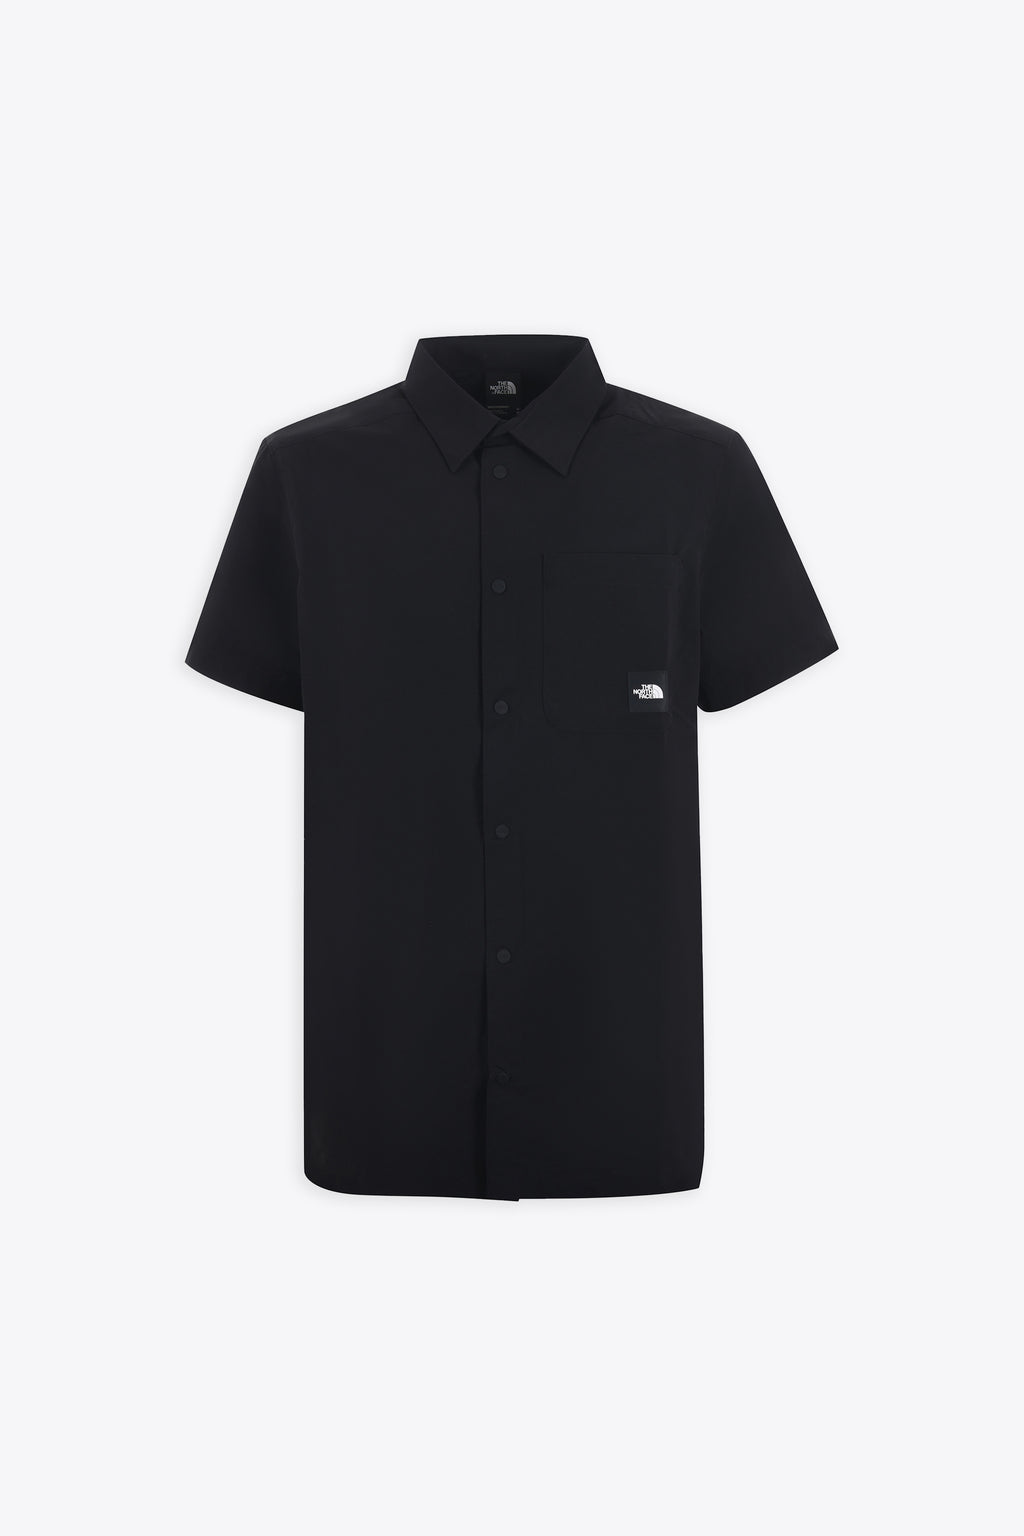 alt-image__Black-nylon-shirt-with-short-sleeves---Murray-Shirt